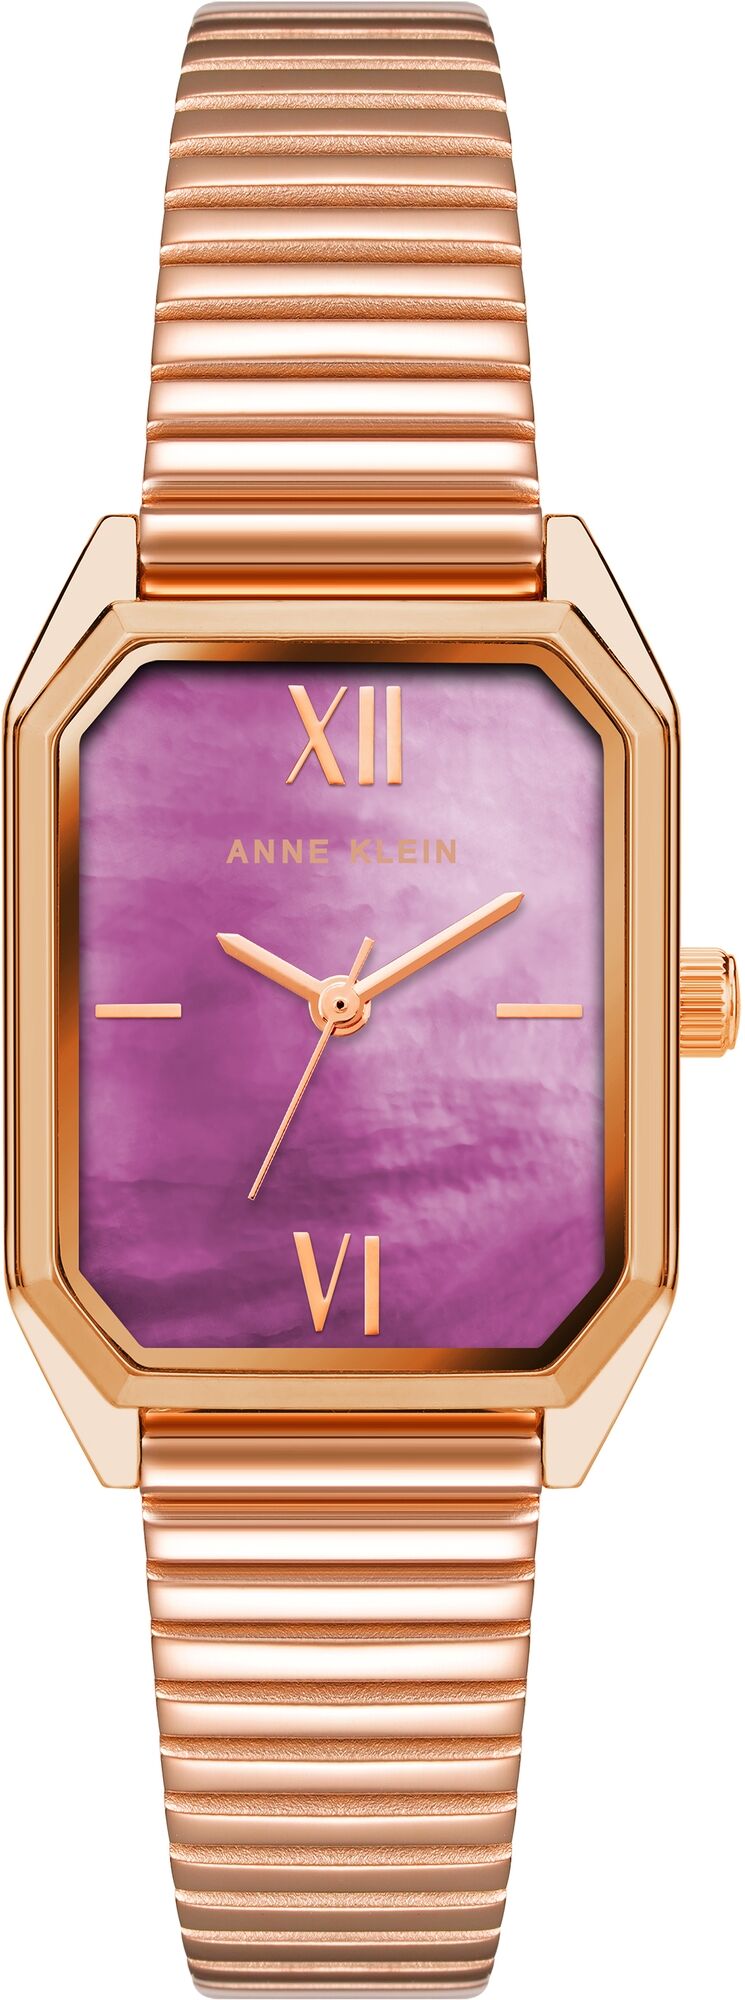 Женские наручные часы Anne Klein Stretch 3980PMRG